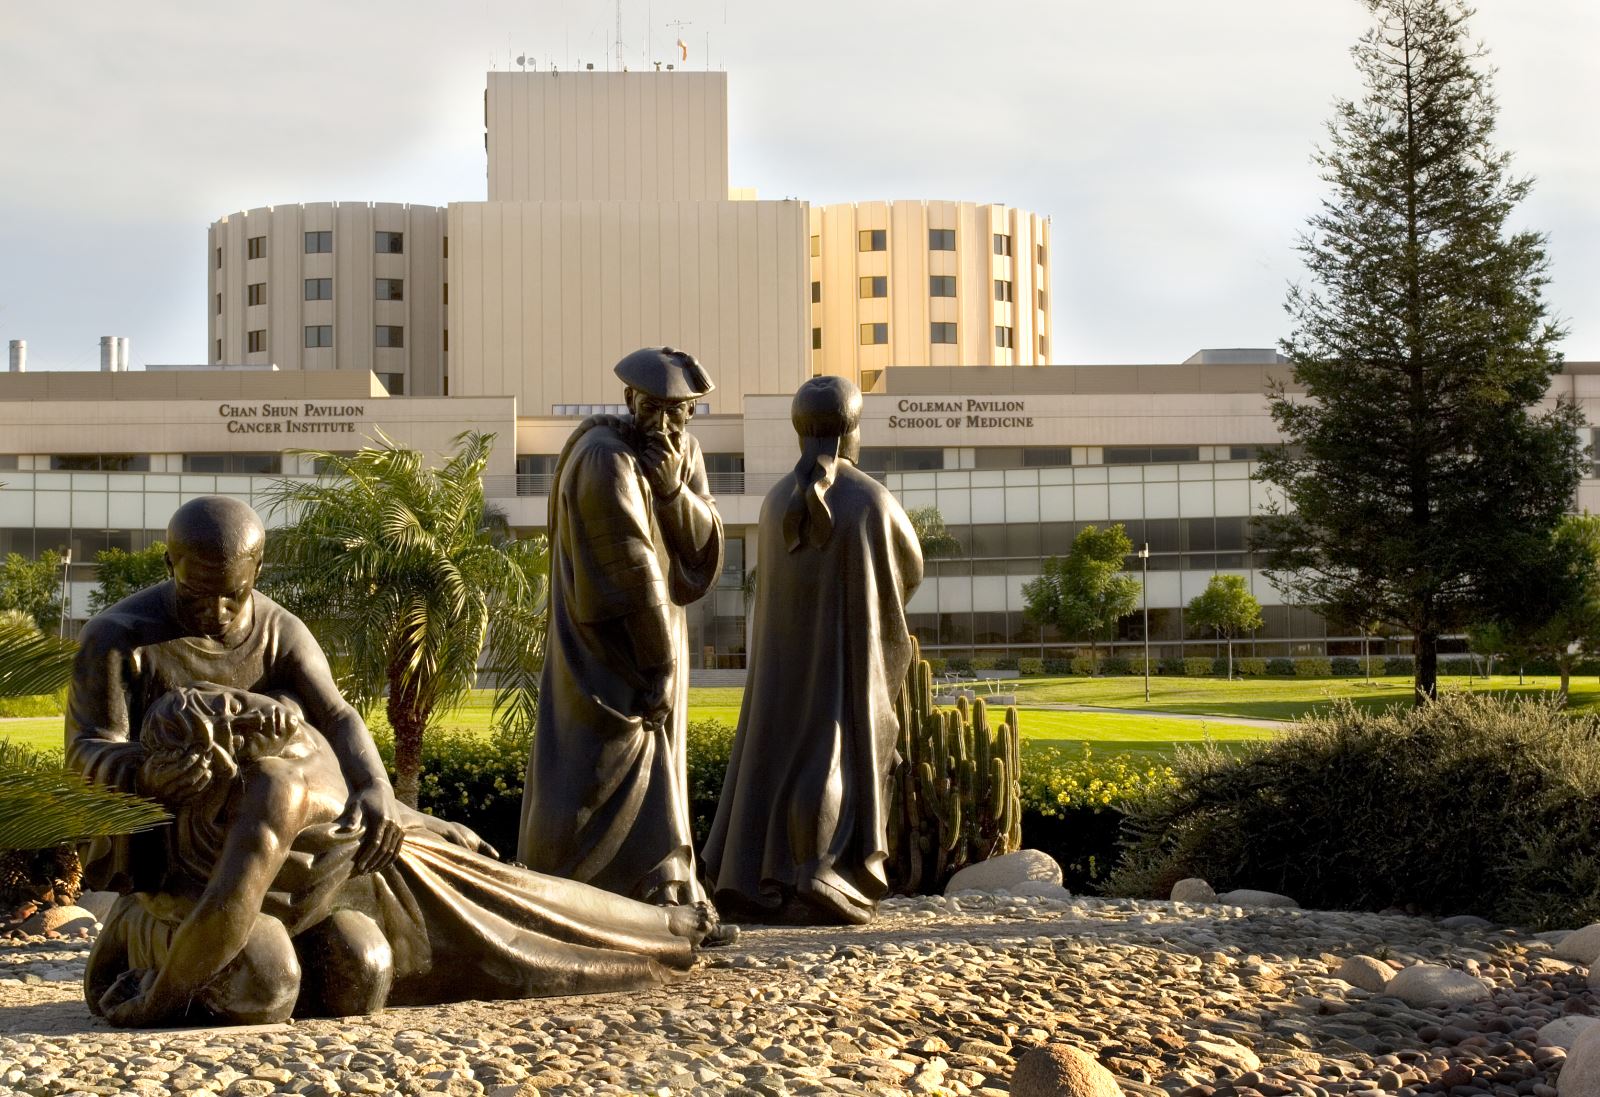 The Good Samaritan Statue at Loma Linda University